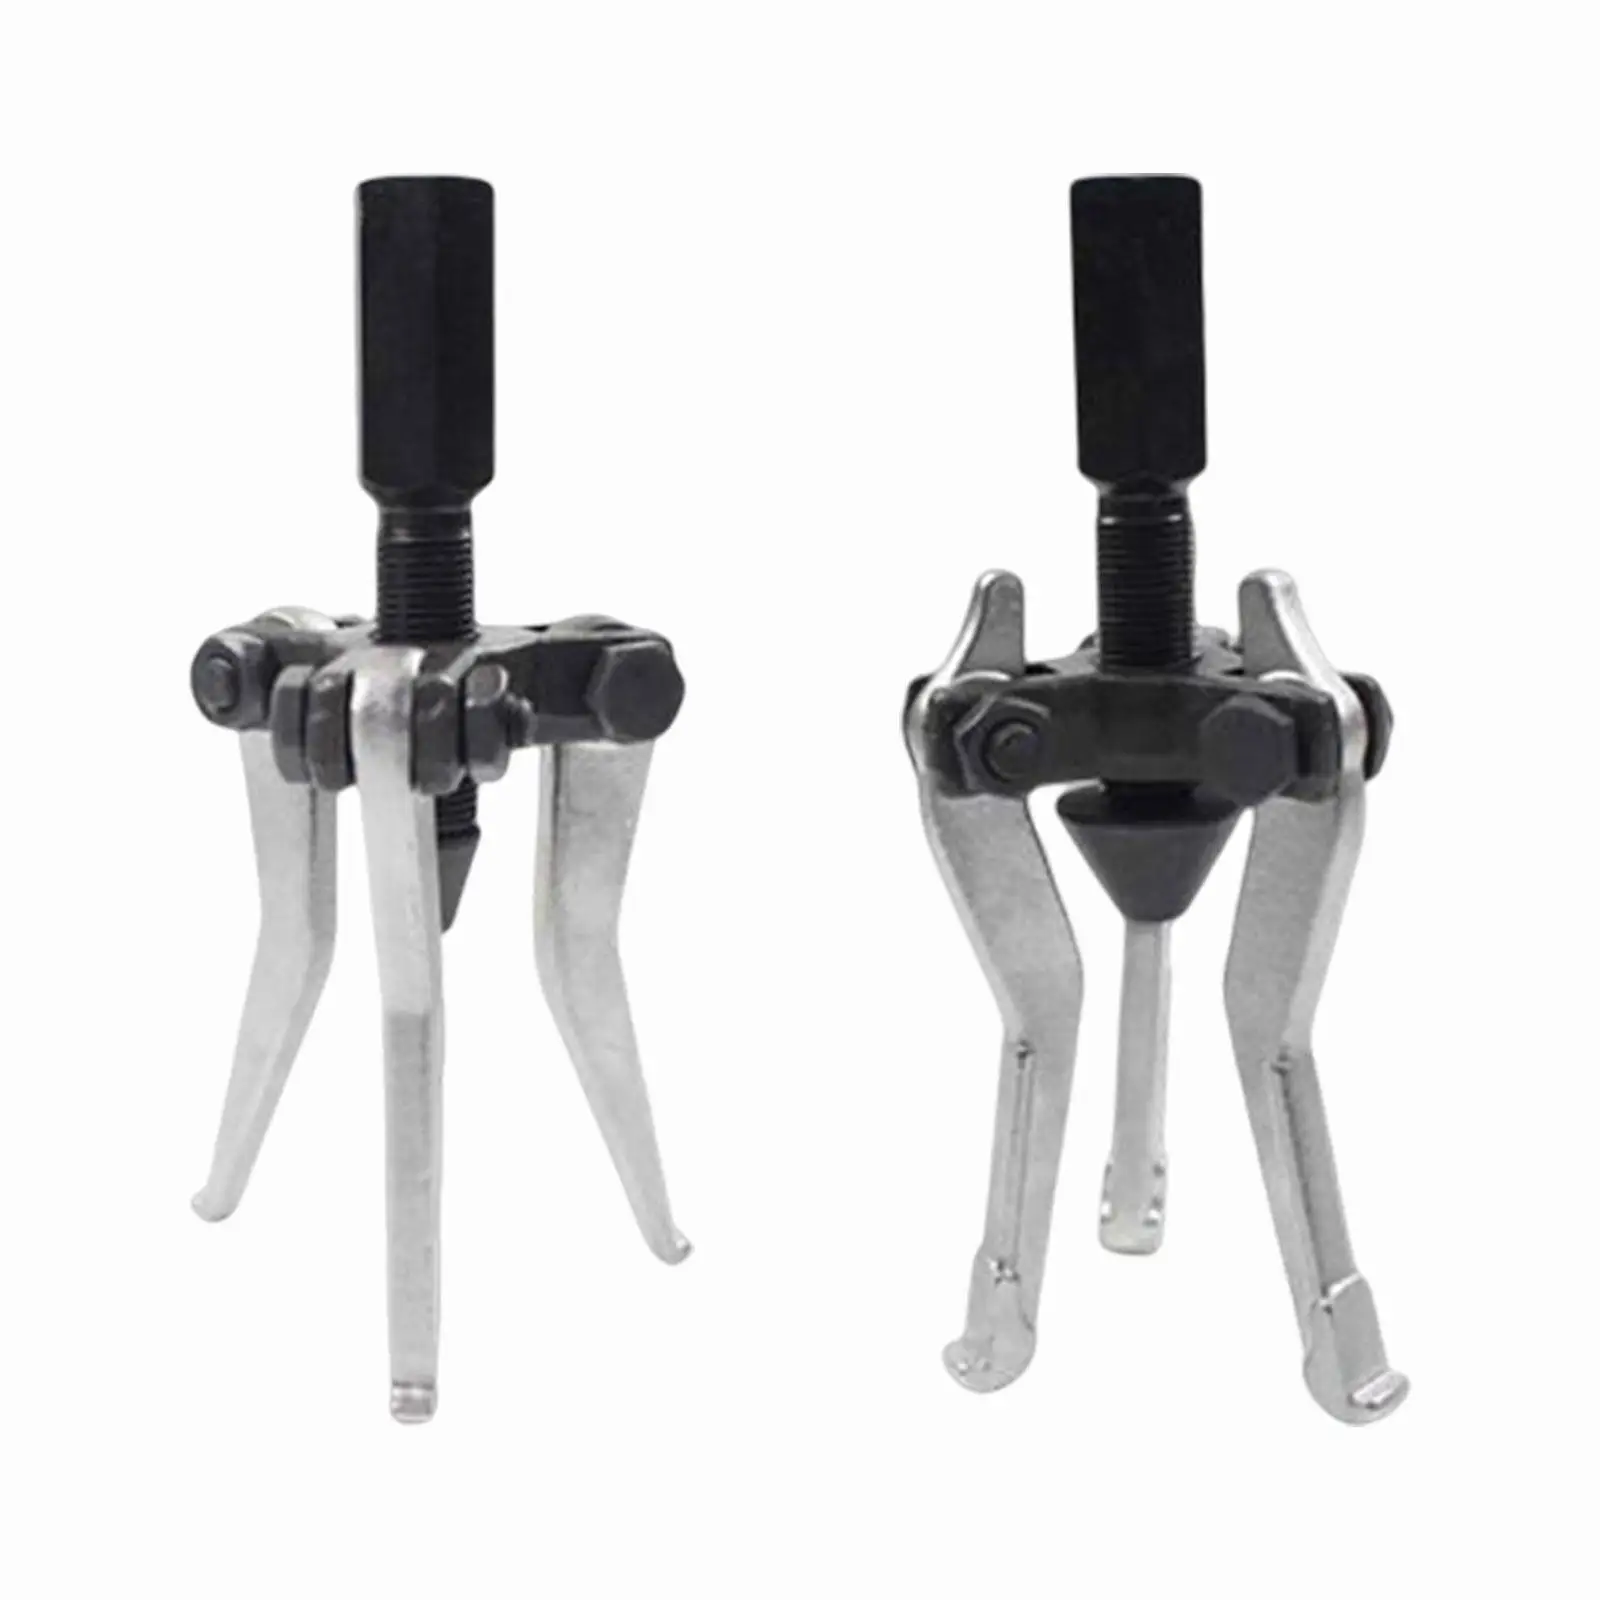 

3 Jaw Gear Puller High Strength 3 Legs Adjustable Heavy Duty Bearing Removal Tool for Bearings Flywheels Gears Pulleys